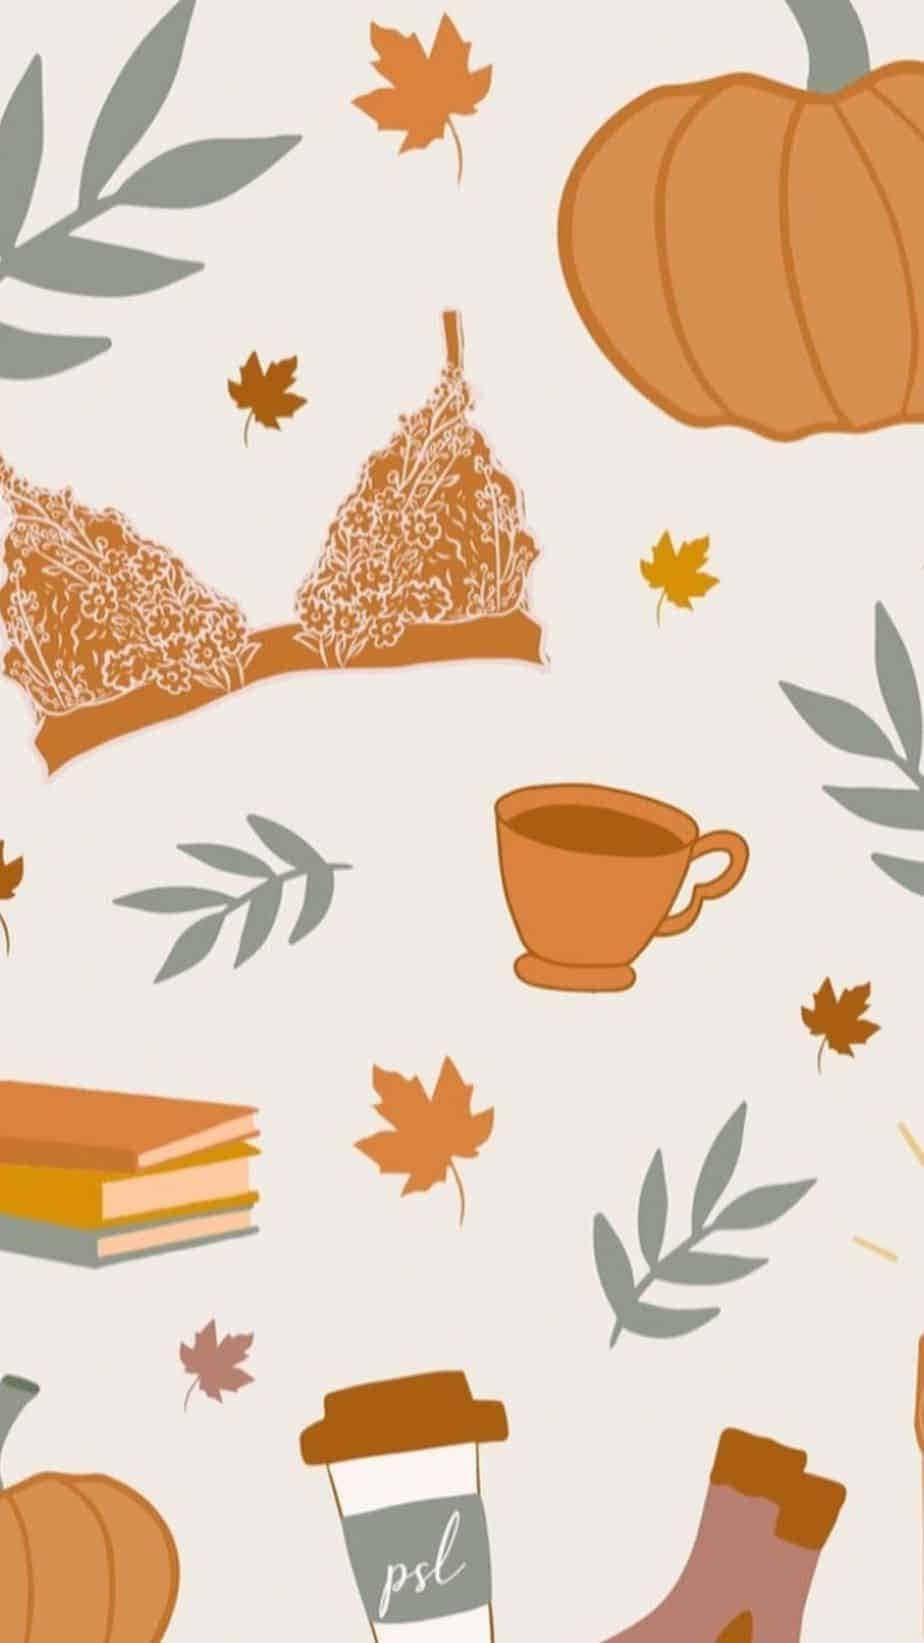 Free Cute Autumn iPhone Wallpaper Downloads, Cute Autumn iPhone Wallpaper for FREE